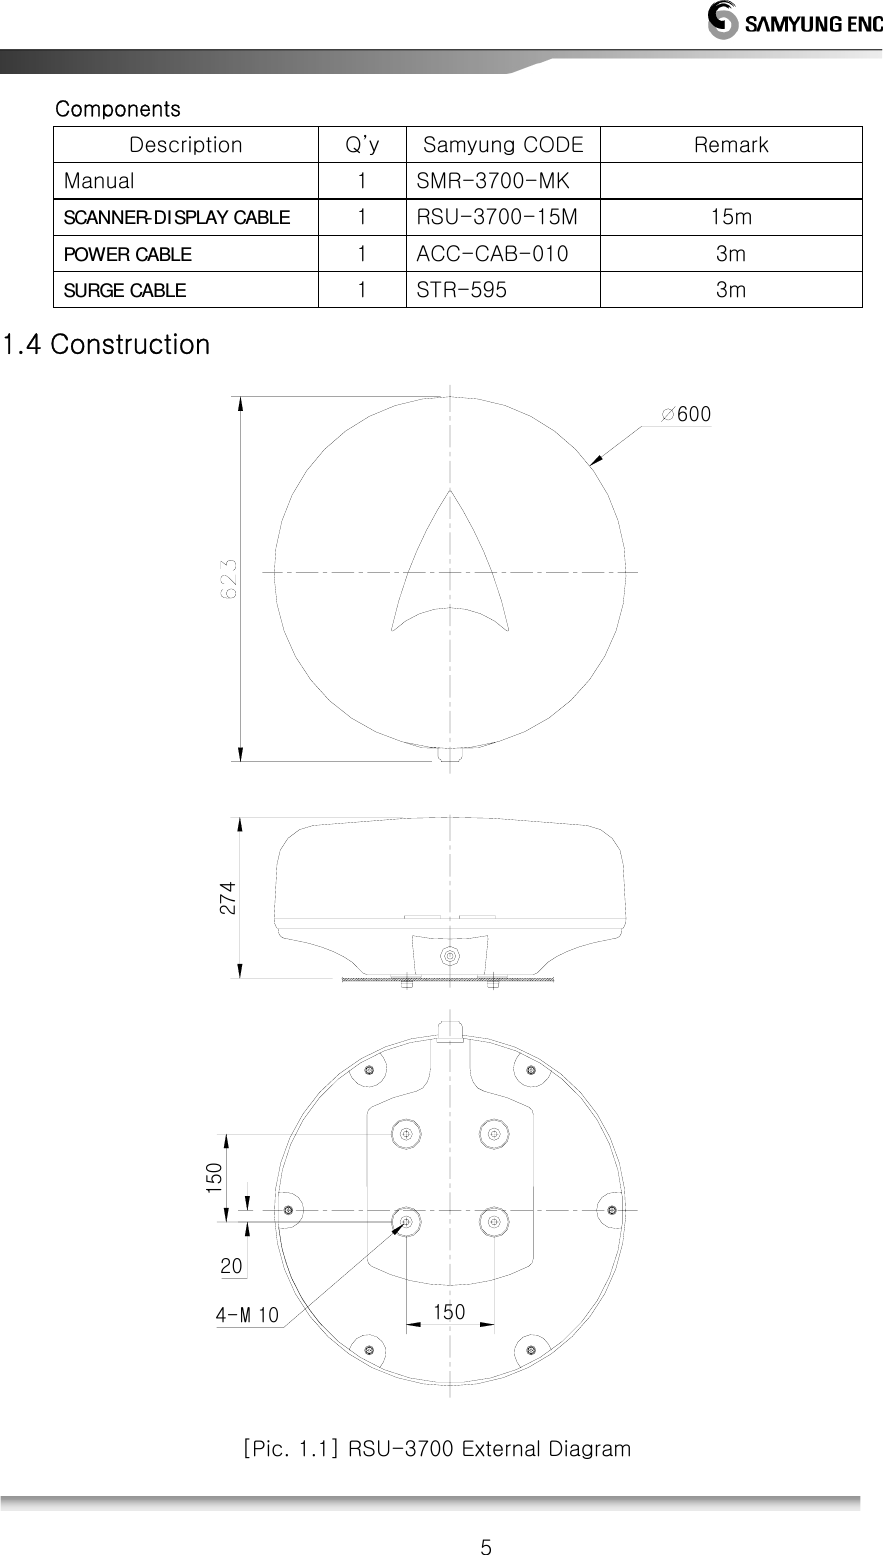   5     Components Description  Q’y  Samyung CODE  Remark Manual  1  SMR-3700-MK   SCANNER-DISPLAY CABLE 1  RSU-3700-15M  15m POWER CABLE 1  ACC-CAB-010  3m SURGE CABLE 1  STR-595  3m 1.4 Construction               1504-M 1015020600274   [Pic. 1.1] RSU-3700 External Diagram 